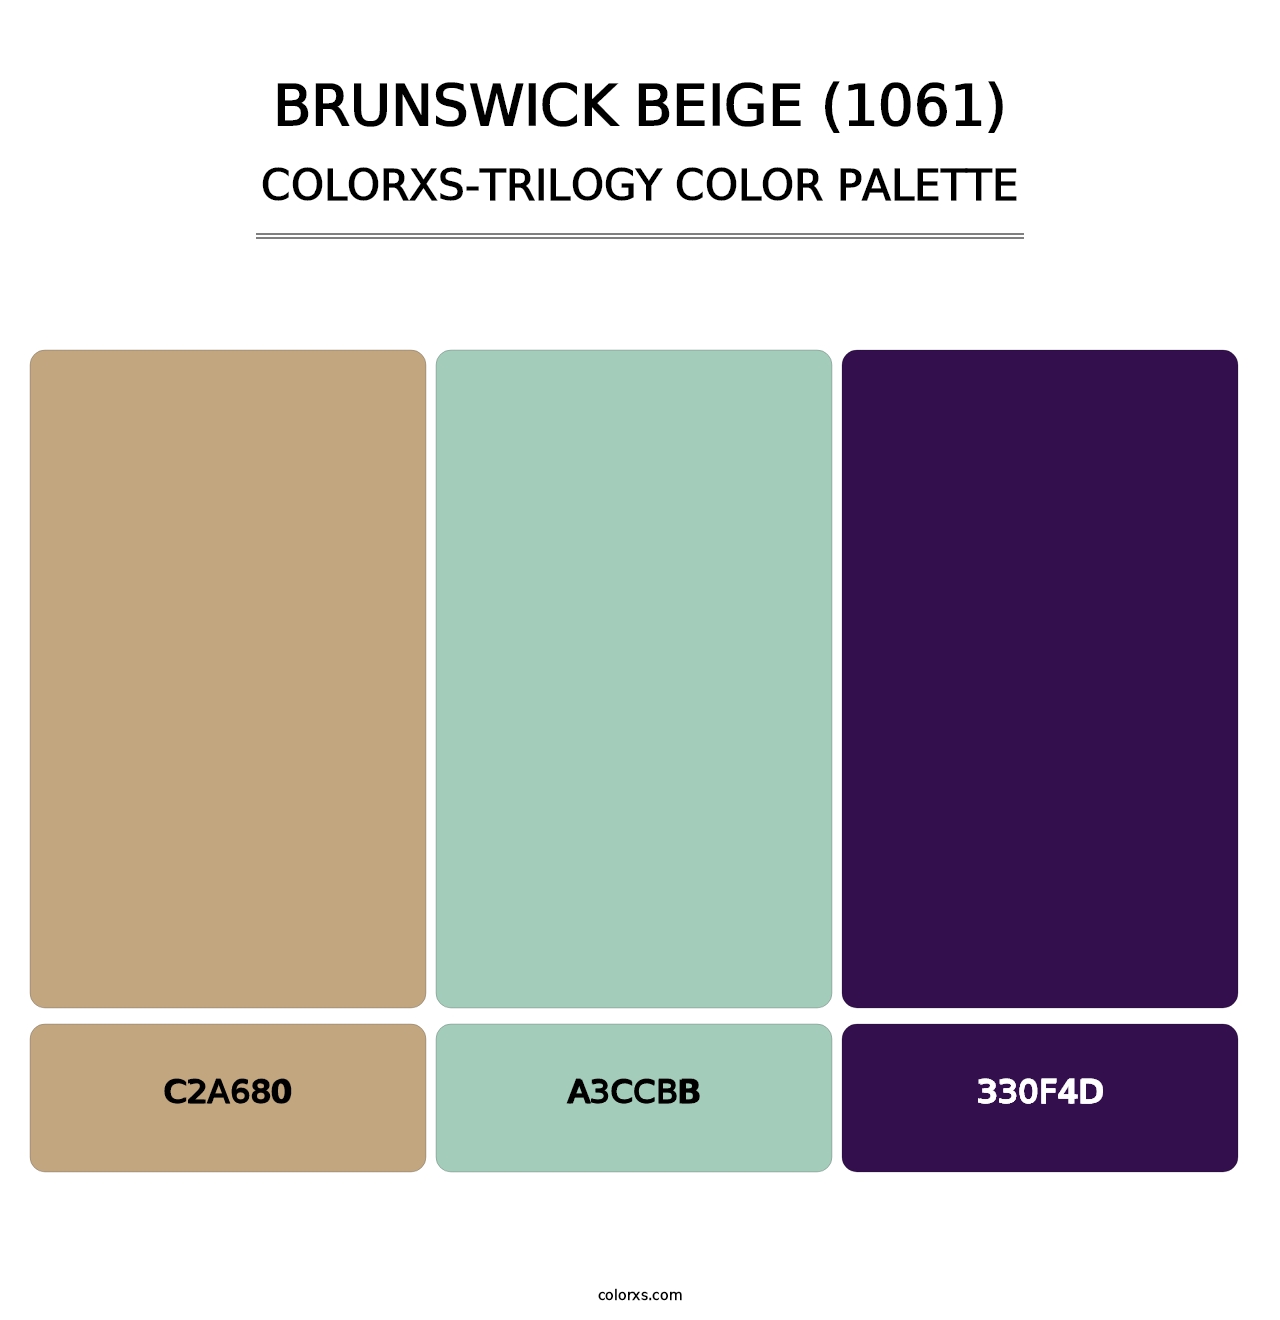 Brunswick Beige (1061) - Colorxs Trilogy Palette